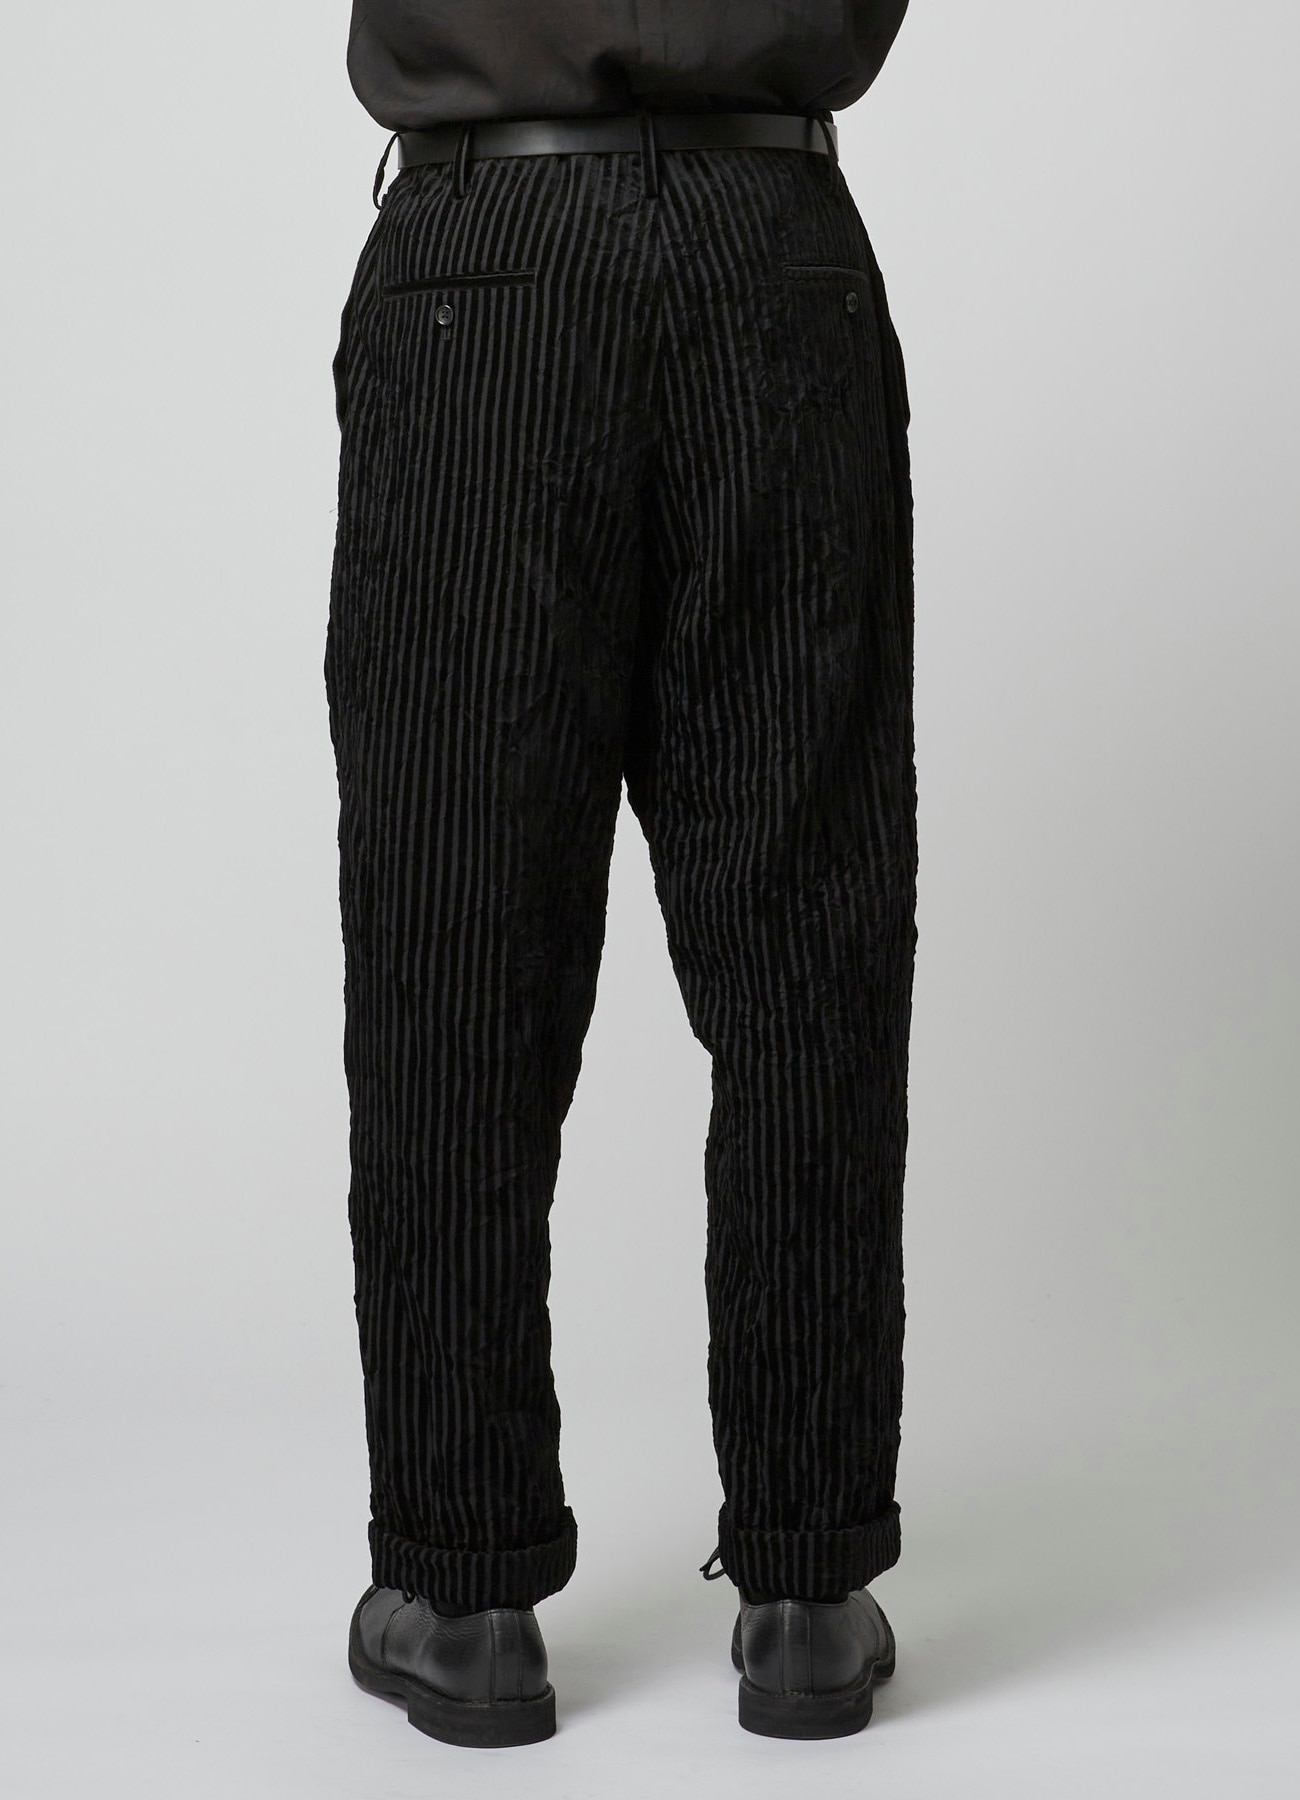 STRYDOM CRAZEE WEAR Cotton Pants black with mustard stripes - SportandMore 